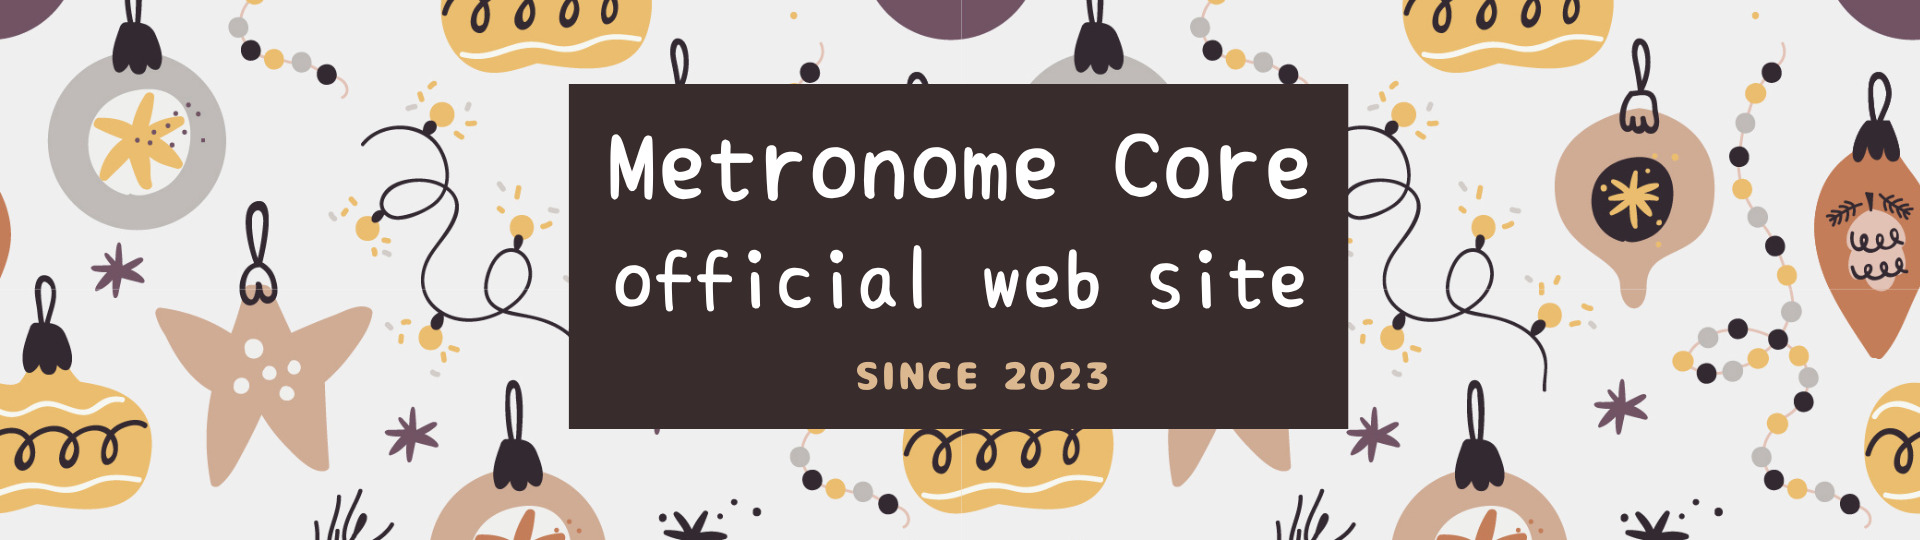 Metronome Core official web site